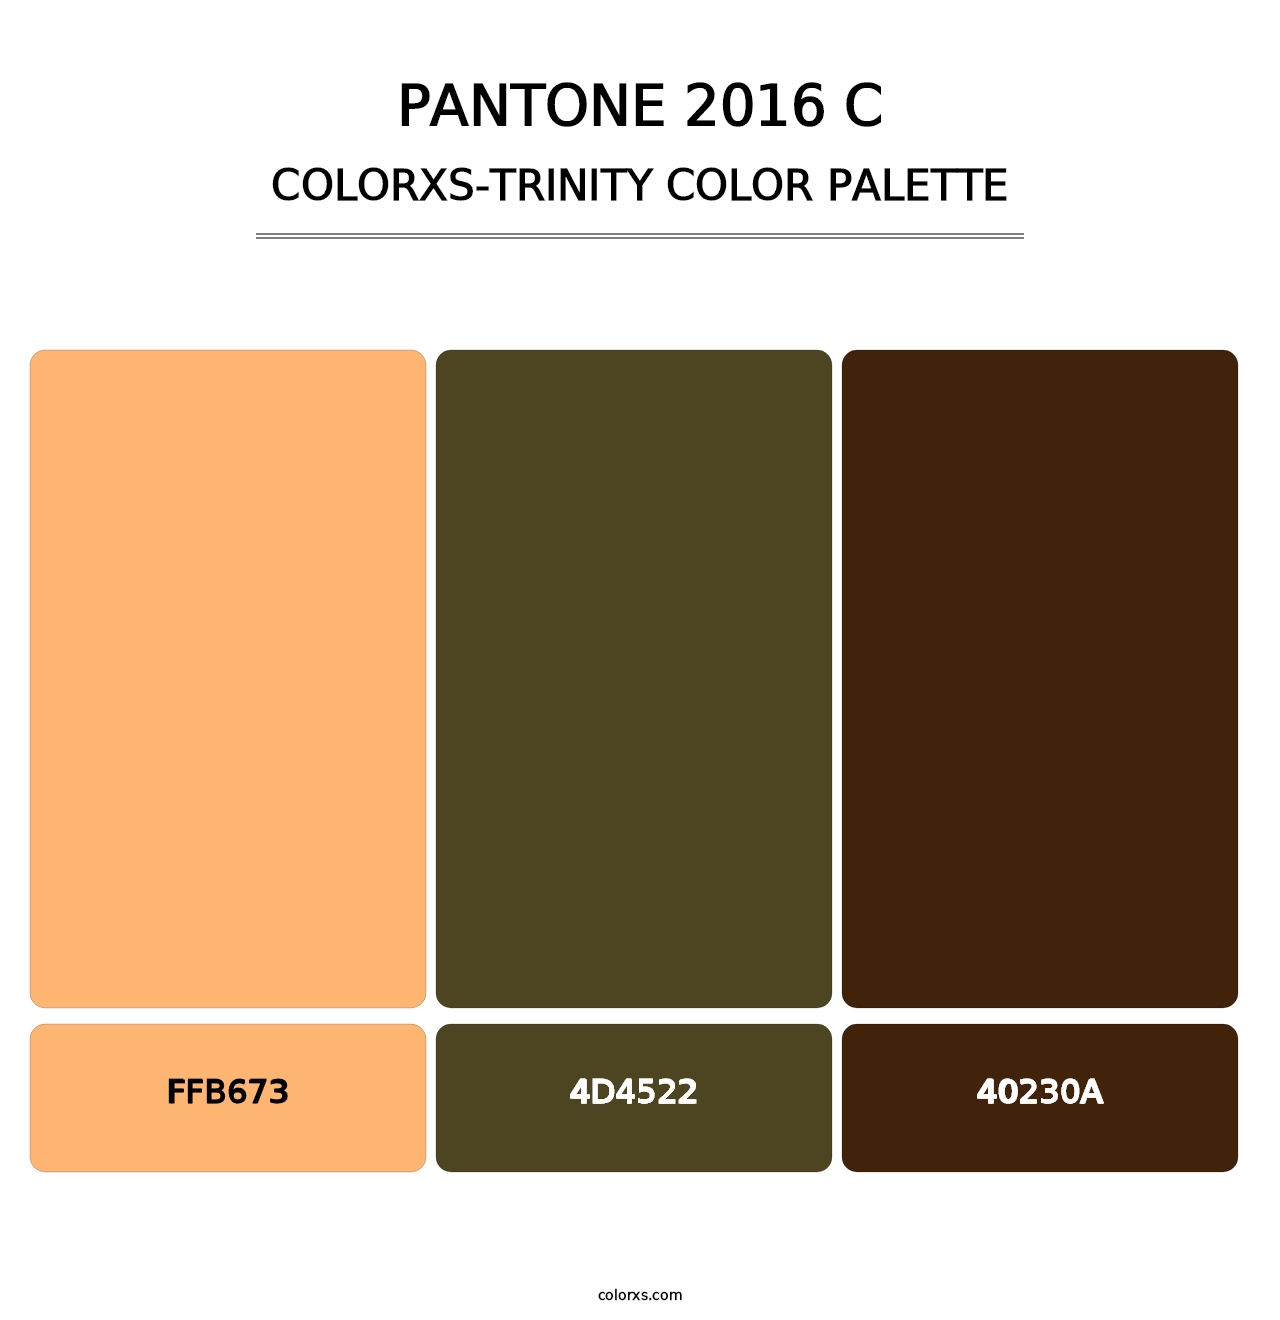 PANTONE 2016 C - Colorxs Trinity Palette